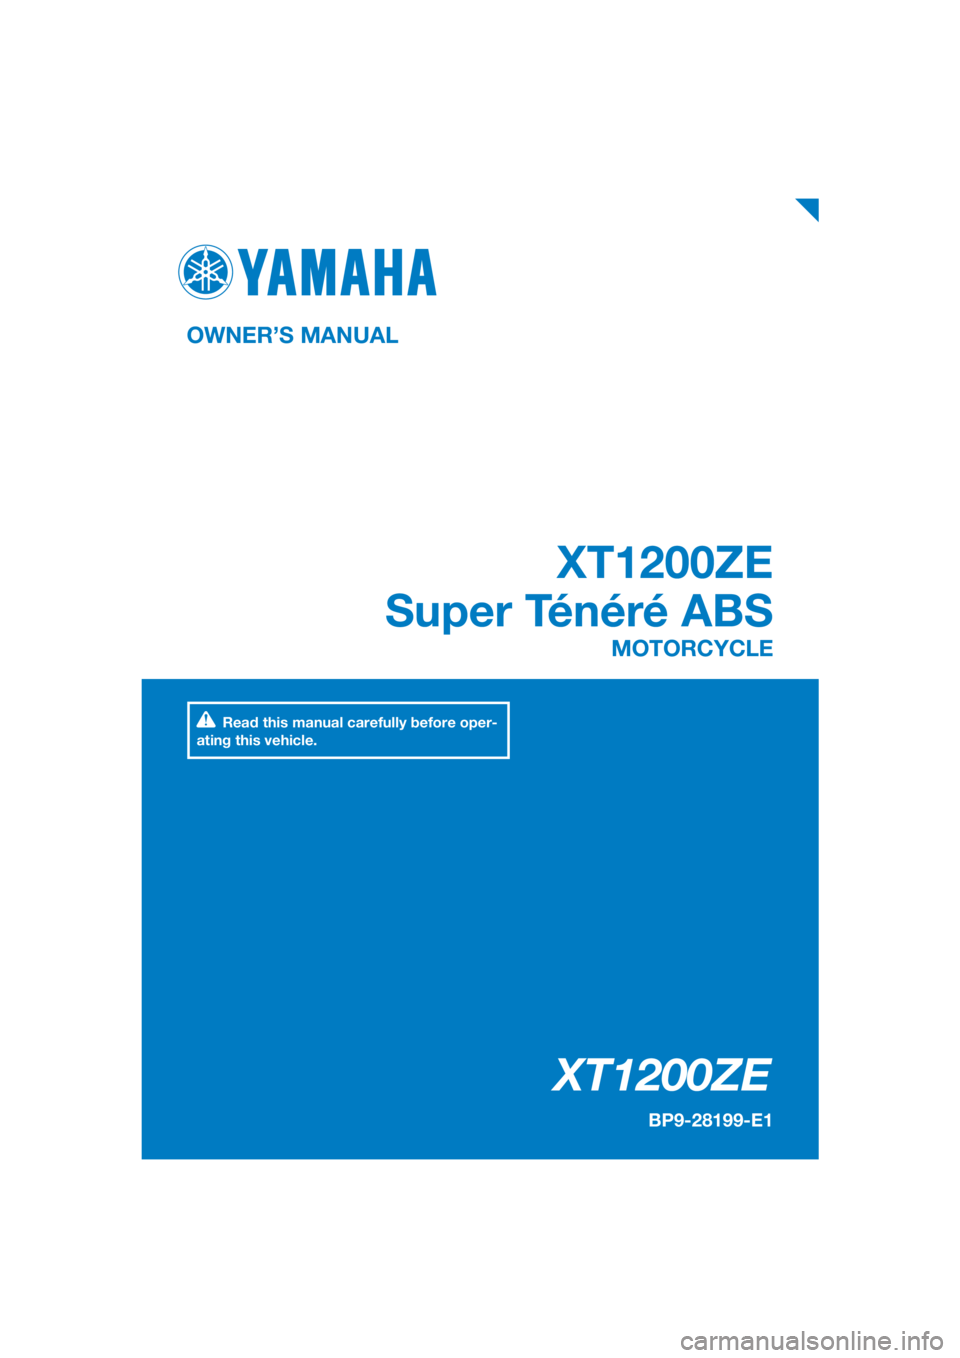 YAMAHA XT1200ZE 2019  Owners Manual DIC183
XT1200ZE
XT1200ZE
Super Ténéré ABS
OWNER’S MANUAL
BP9-28199-E1
MOTORCYCLE
[English  (E)]
Read this manual carefully before oper-
ating this vehicle. 